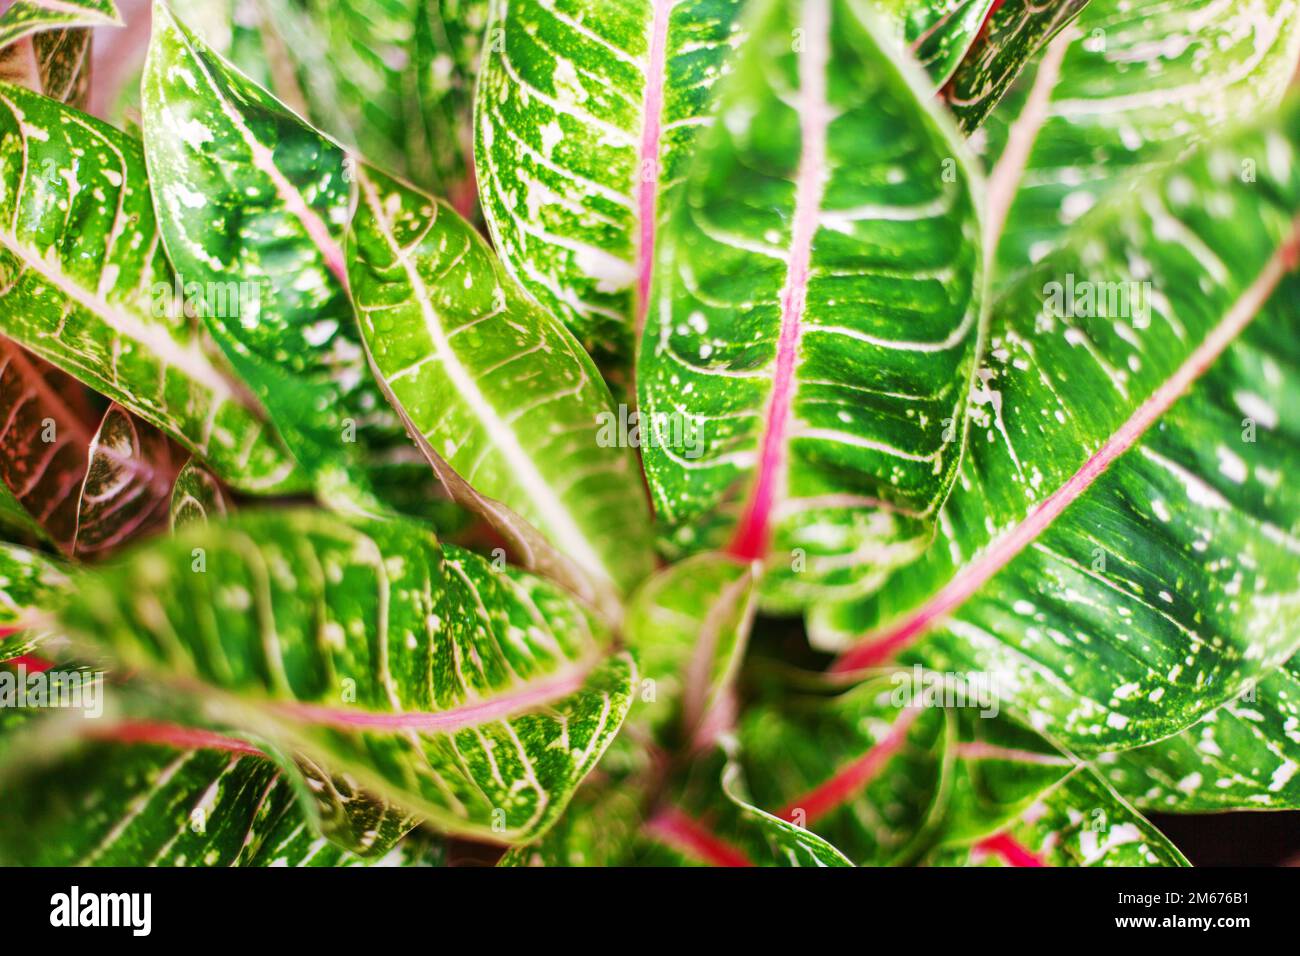 Aglaonema leaves Red Sumatra, Pride Sumatra, white pink green pattern Dieffenbachia leaf, exotic tropical foliage texture, beautiful ornamental plant Stock Photo